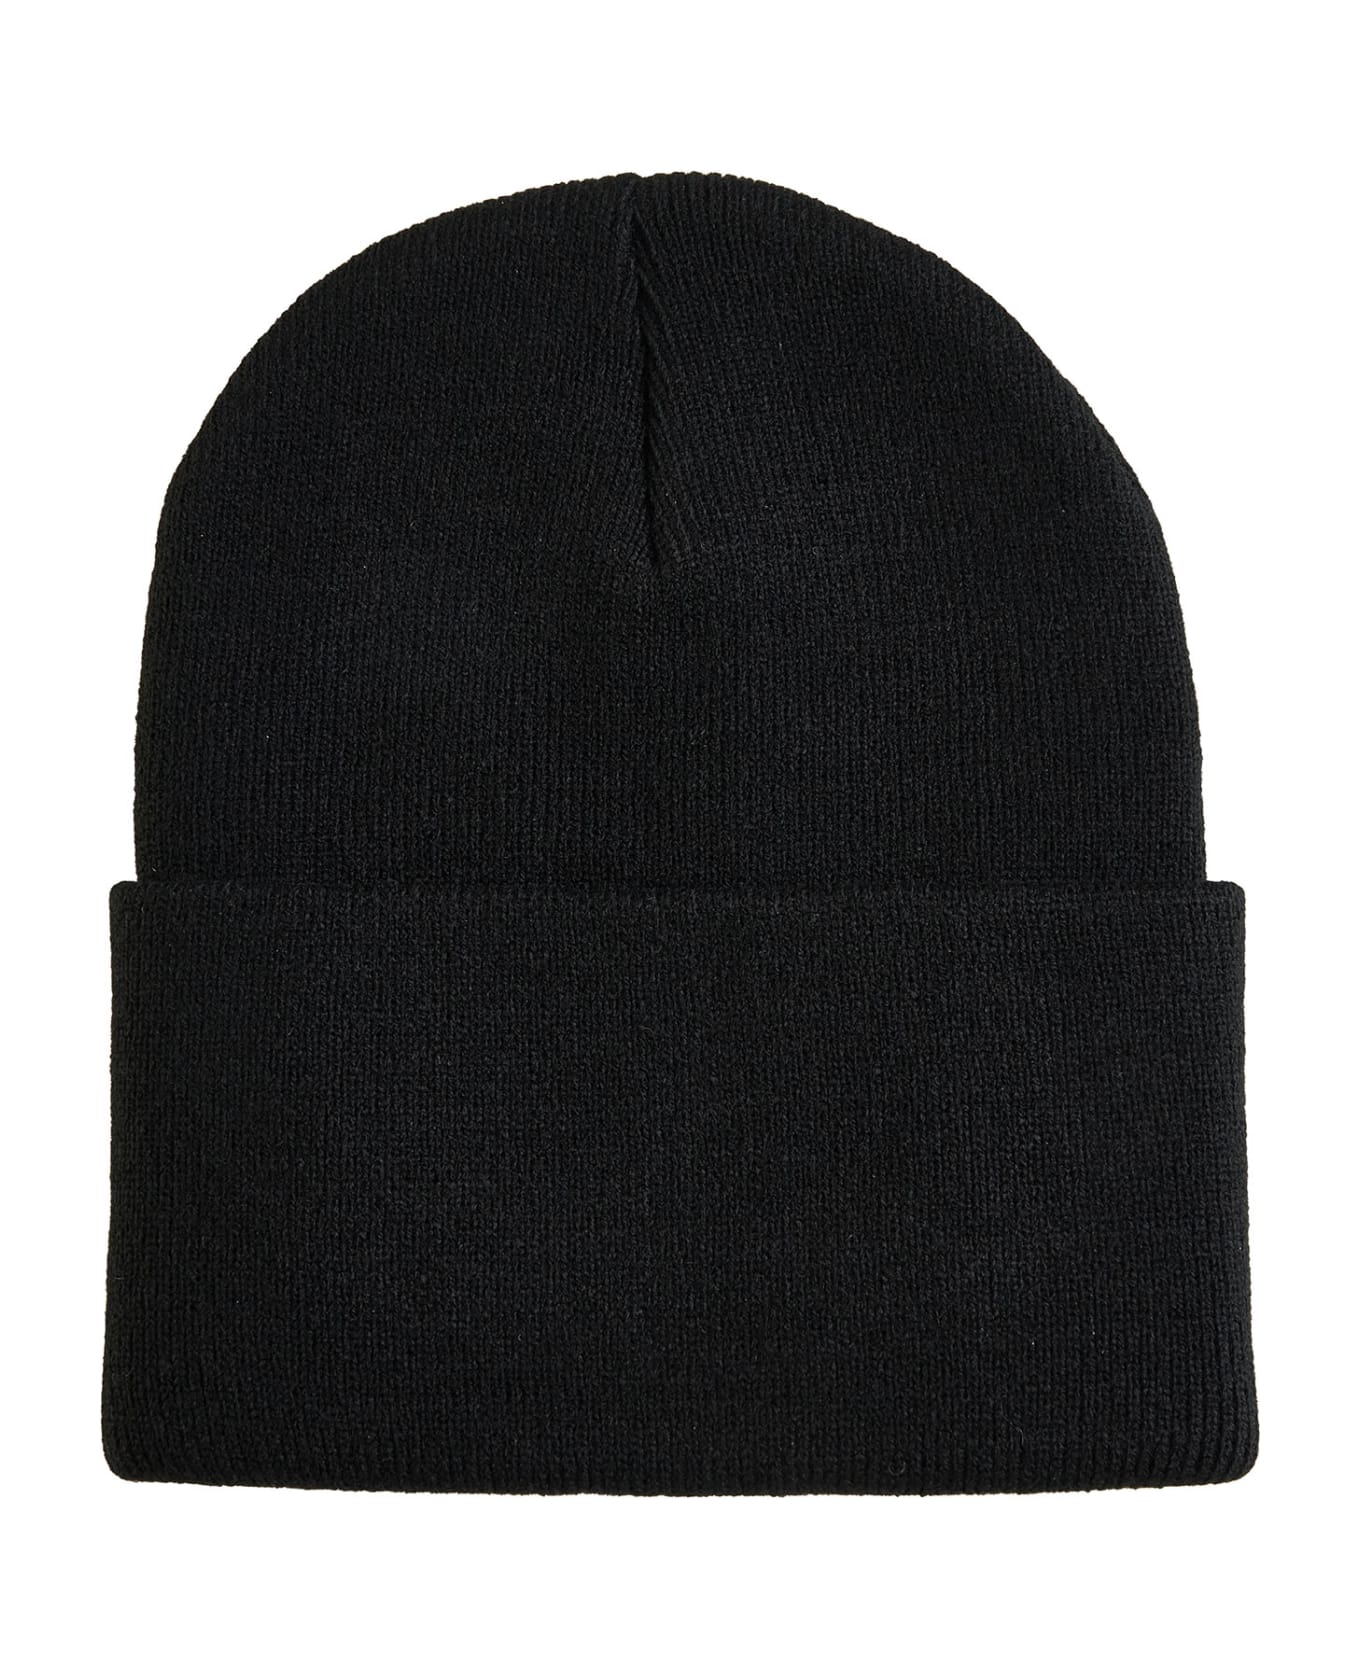 Carhartt Hat - Black